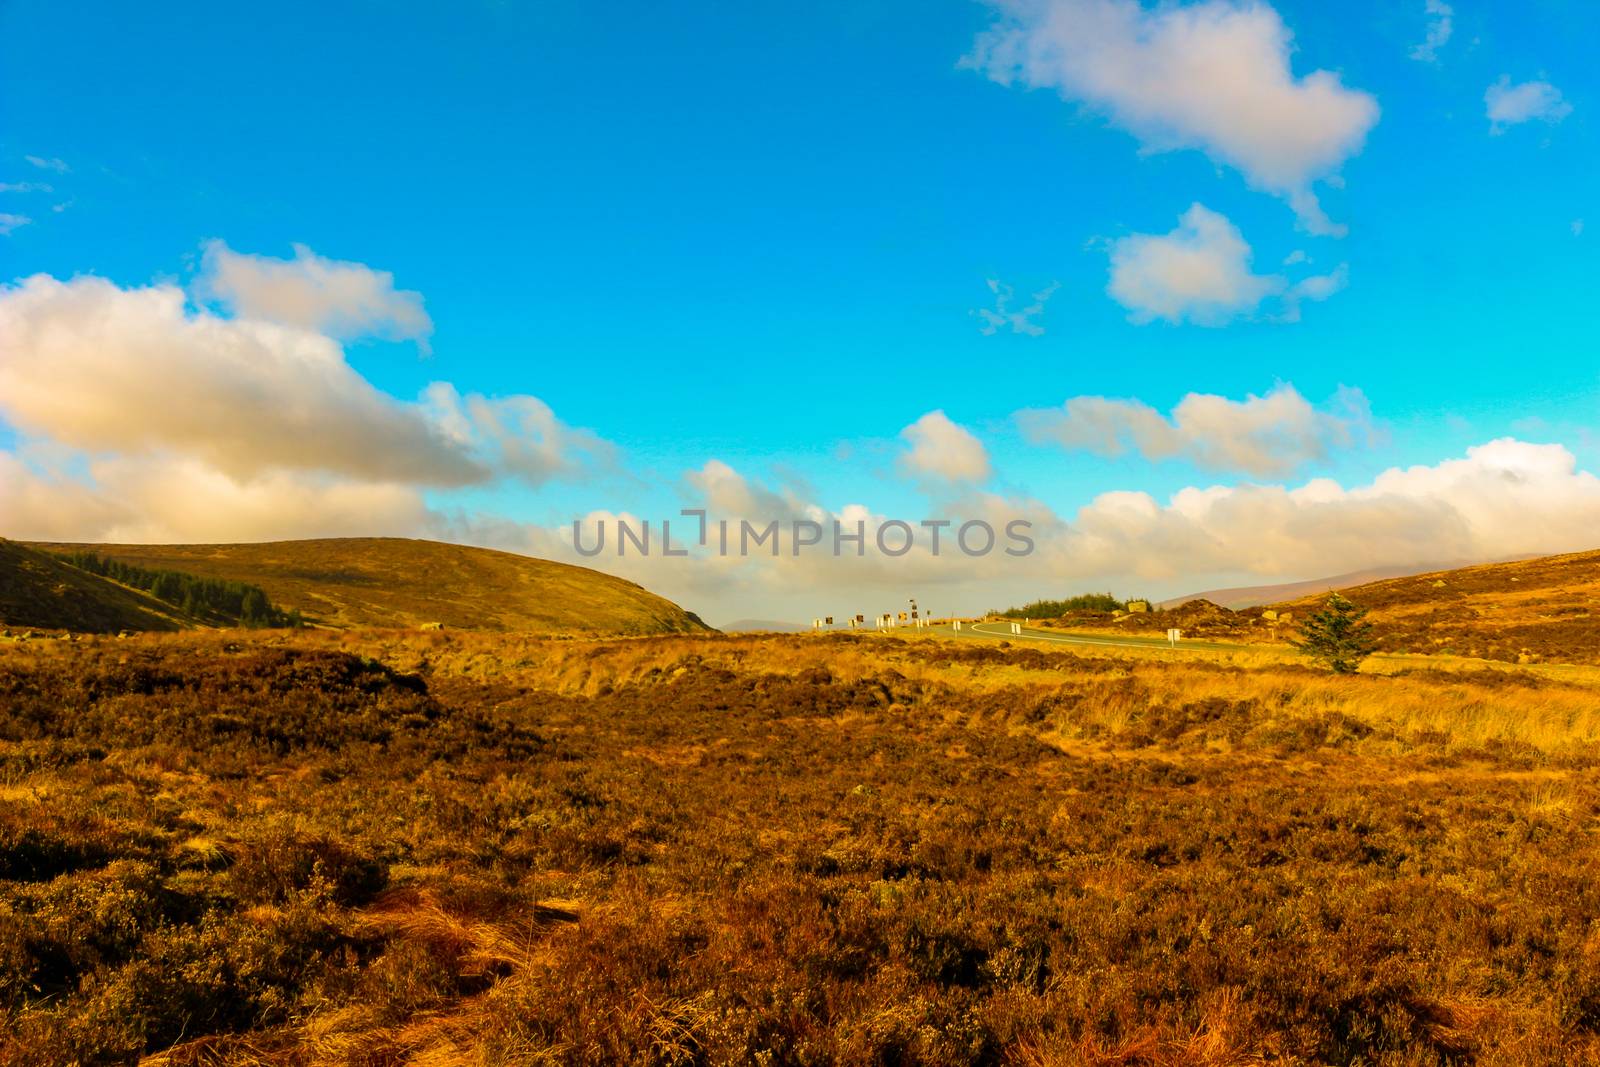 Wicklow mountains in Ireland during the winter season by mynewturtle1